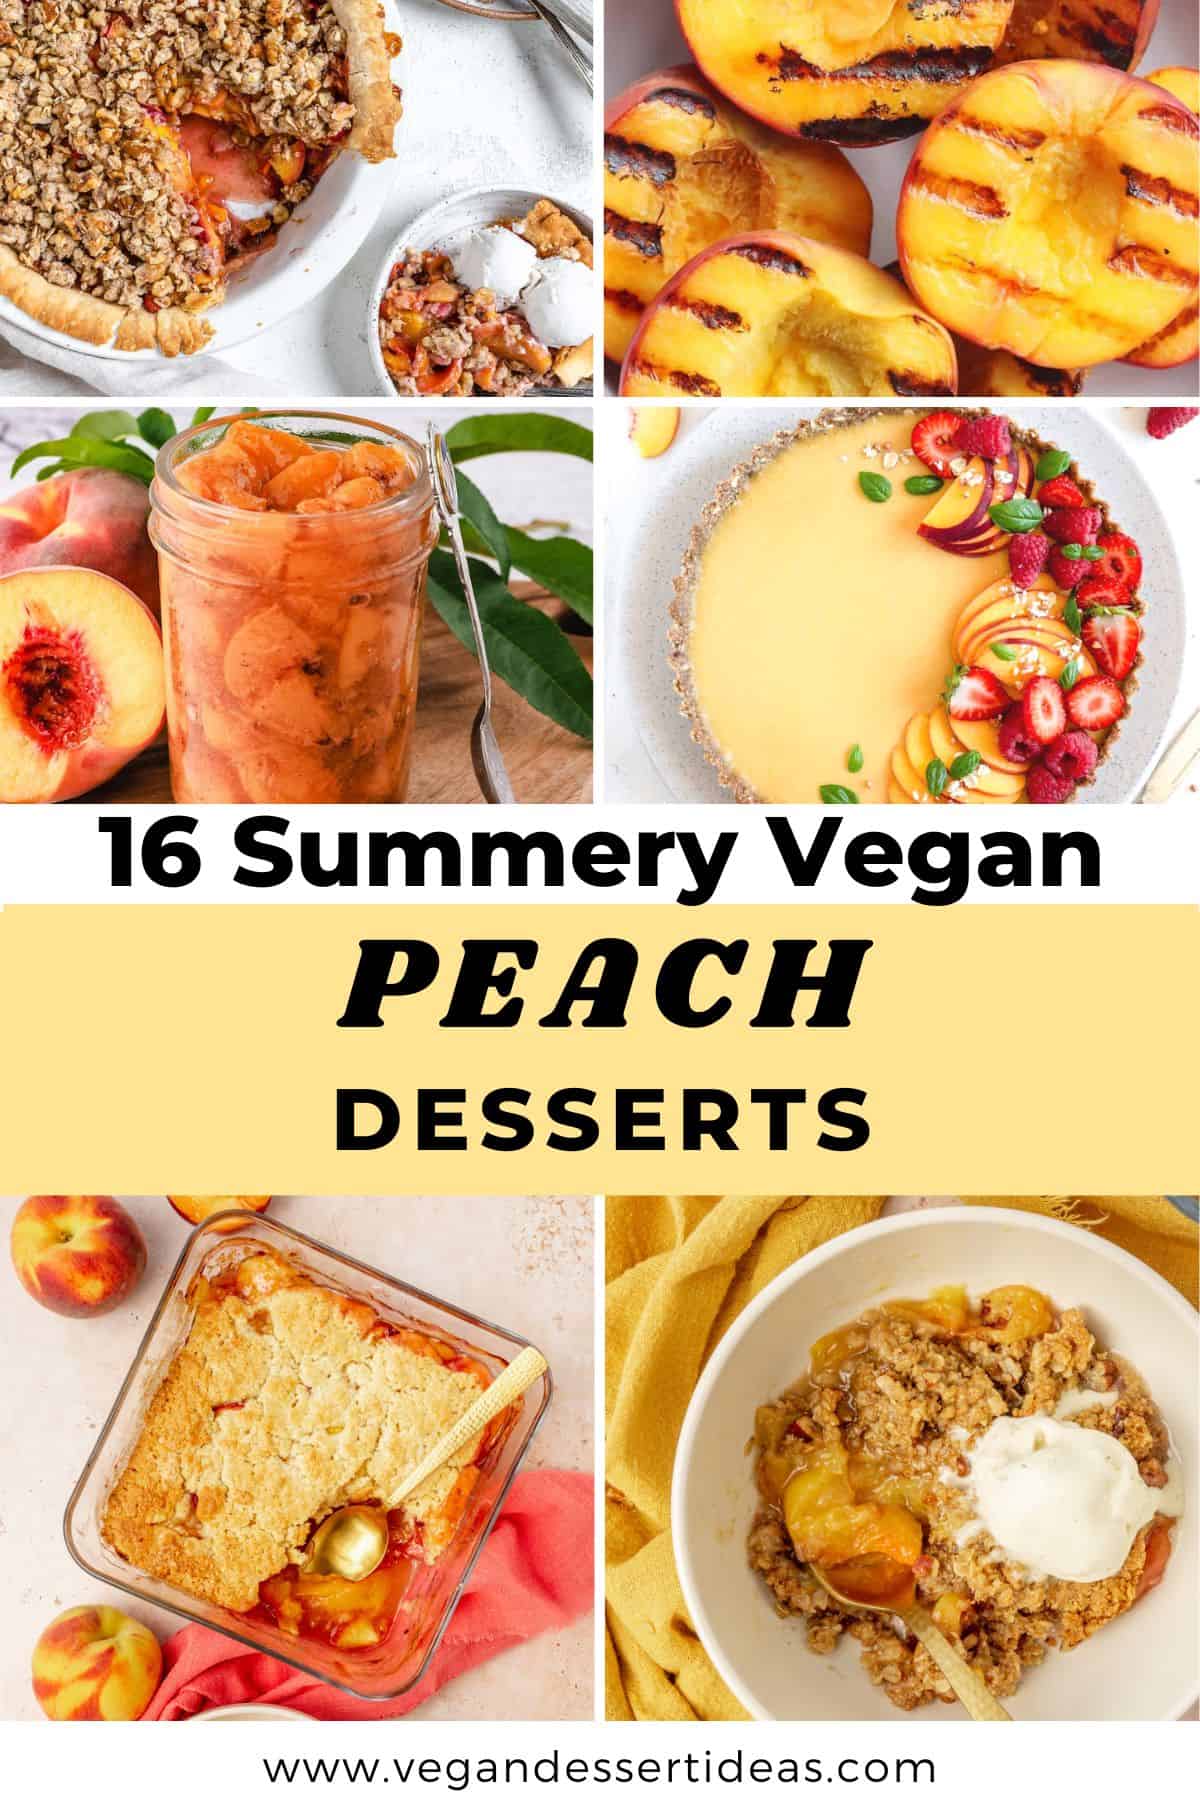 Pie, grilled peaches, compote, tart, cobbler, crisp "16 Summery Vegan Peach Desserts".